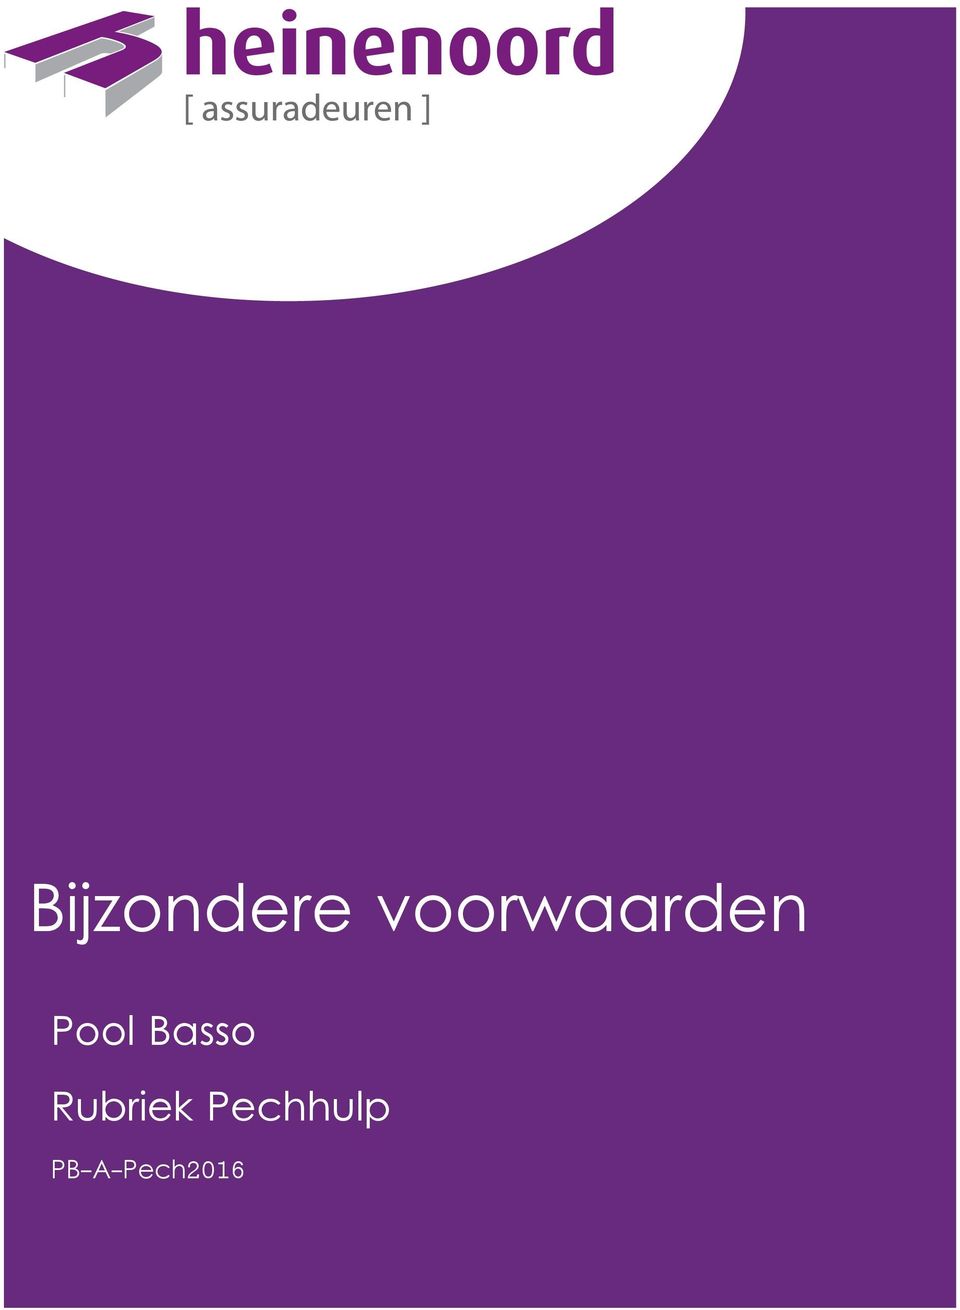 Pool Basso